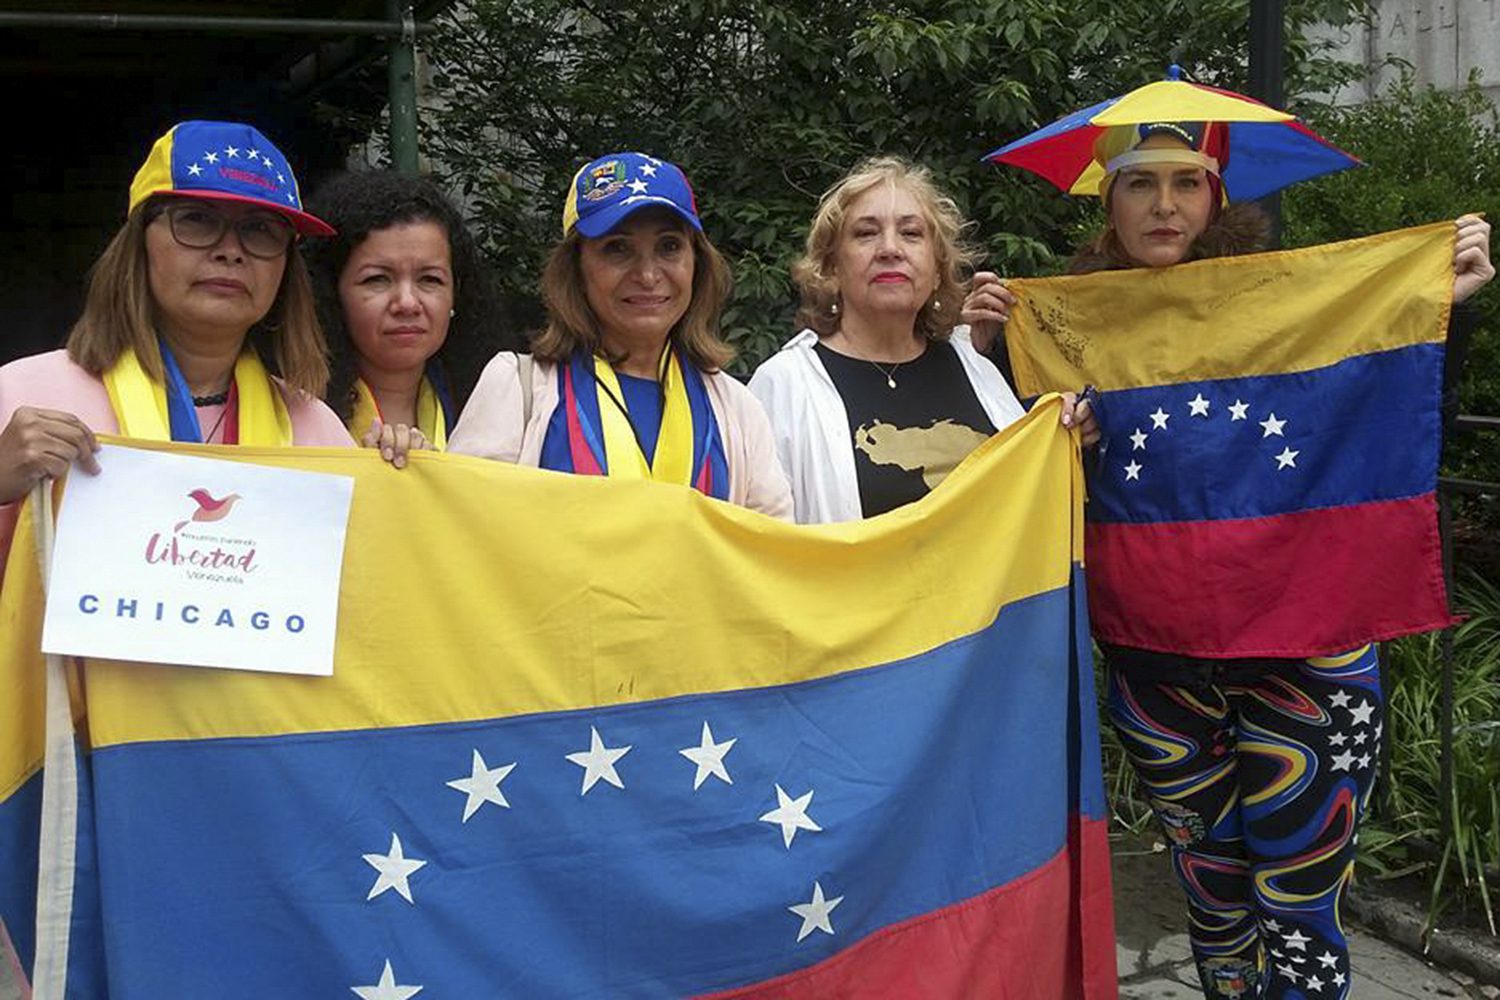 five women weaing Venezuelan colors and holding Venezuelan flags face the camera